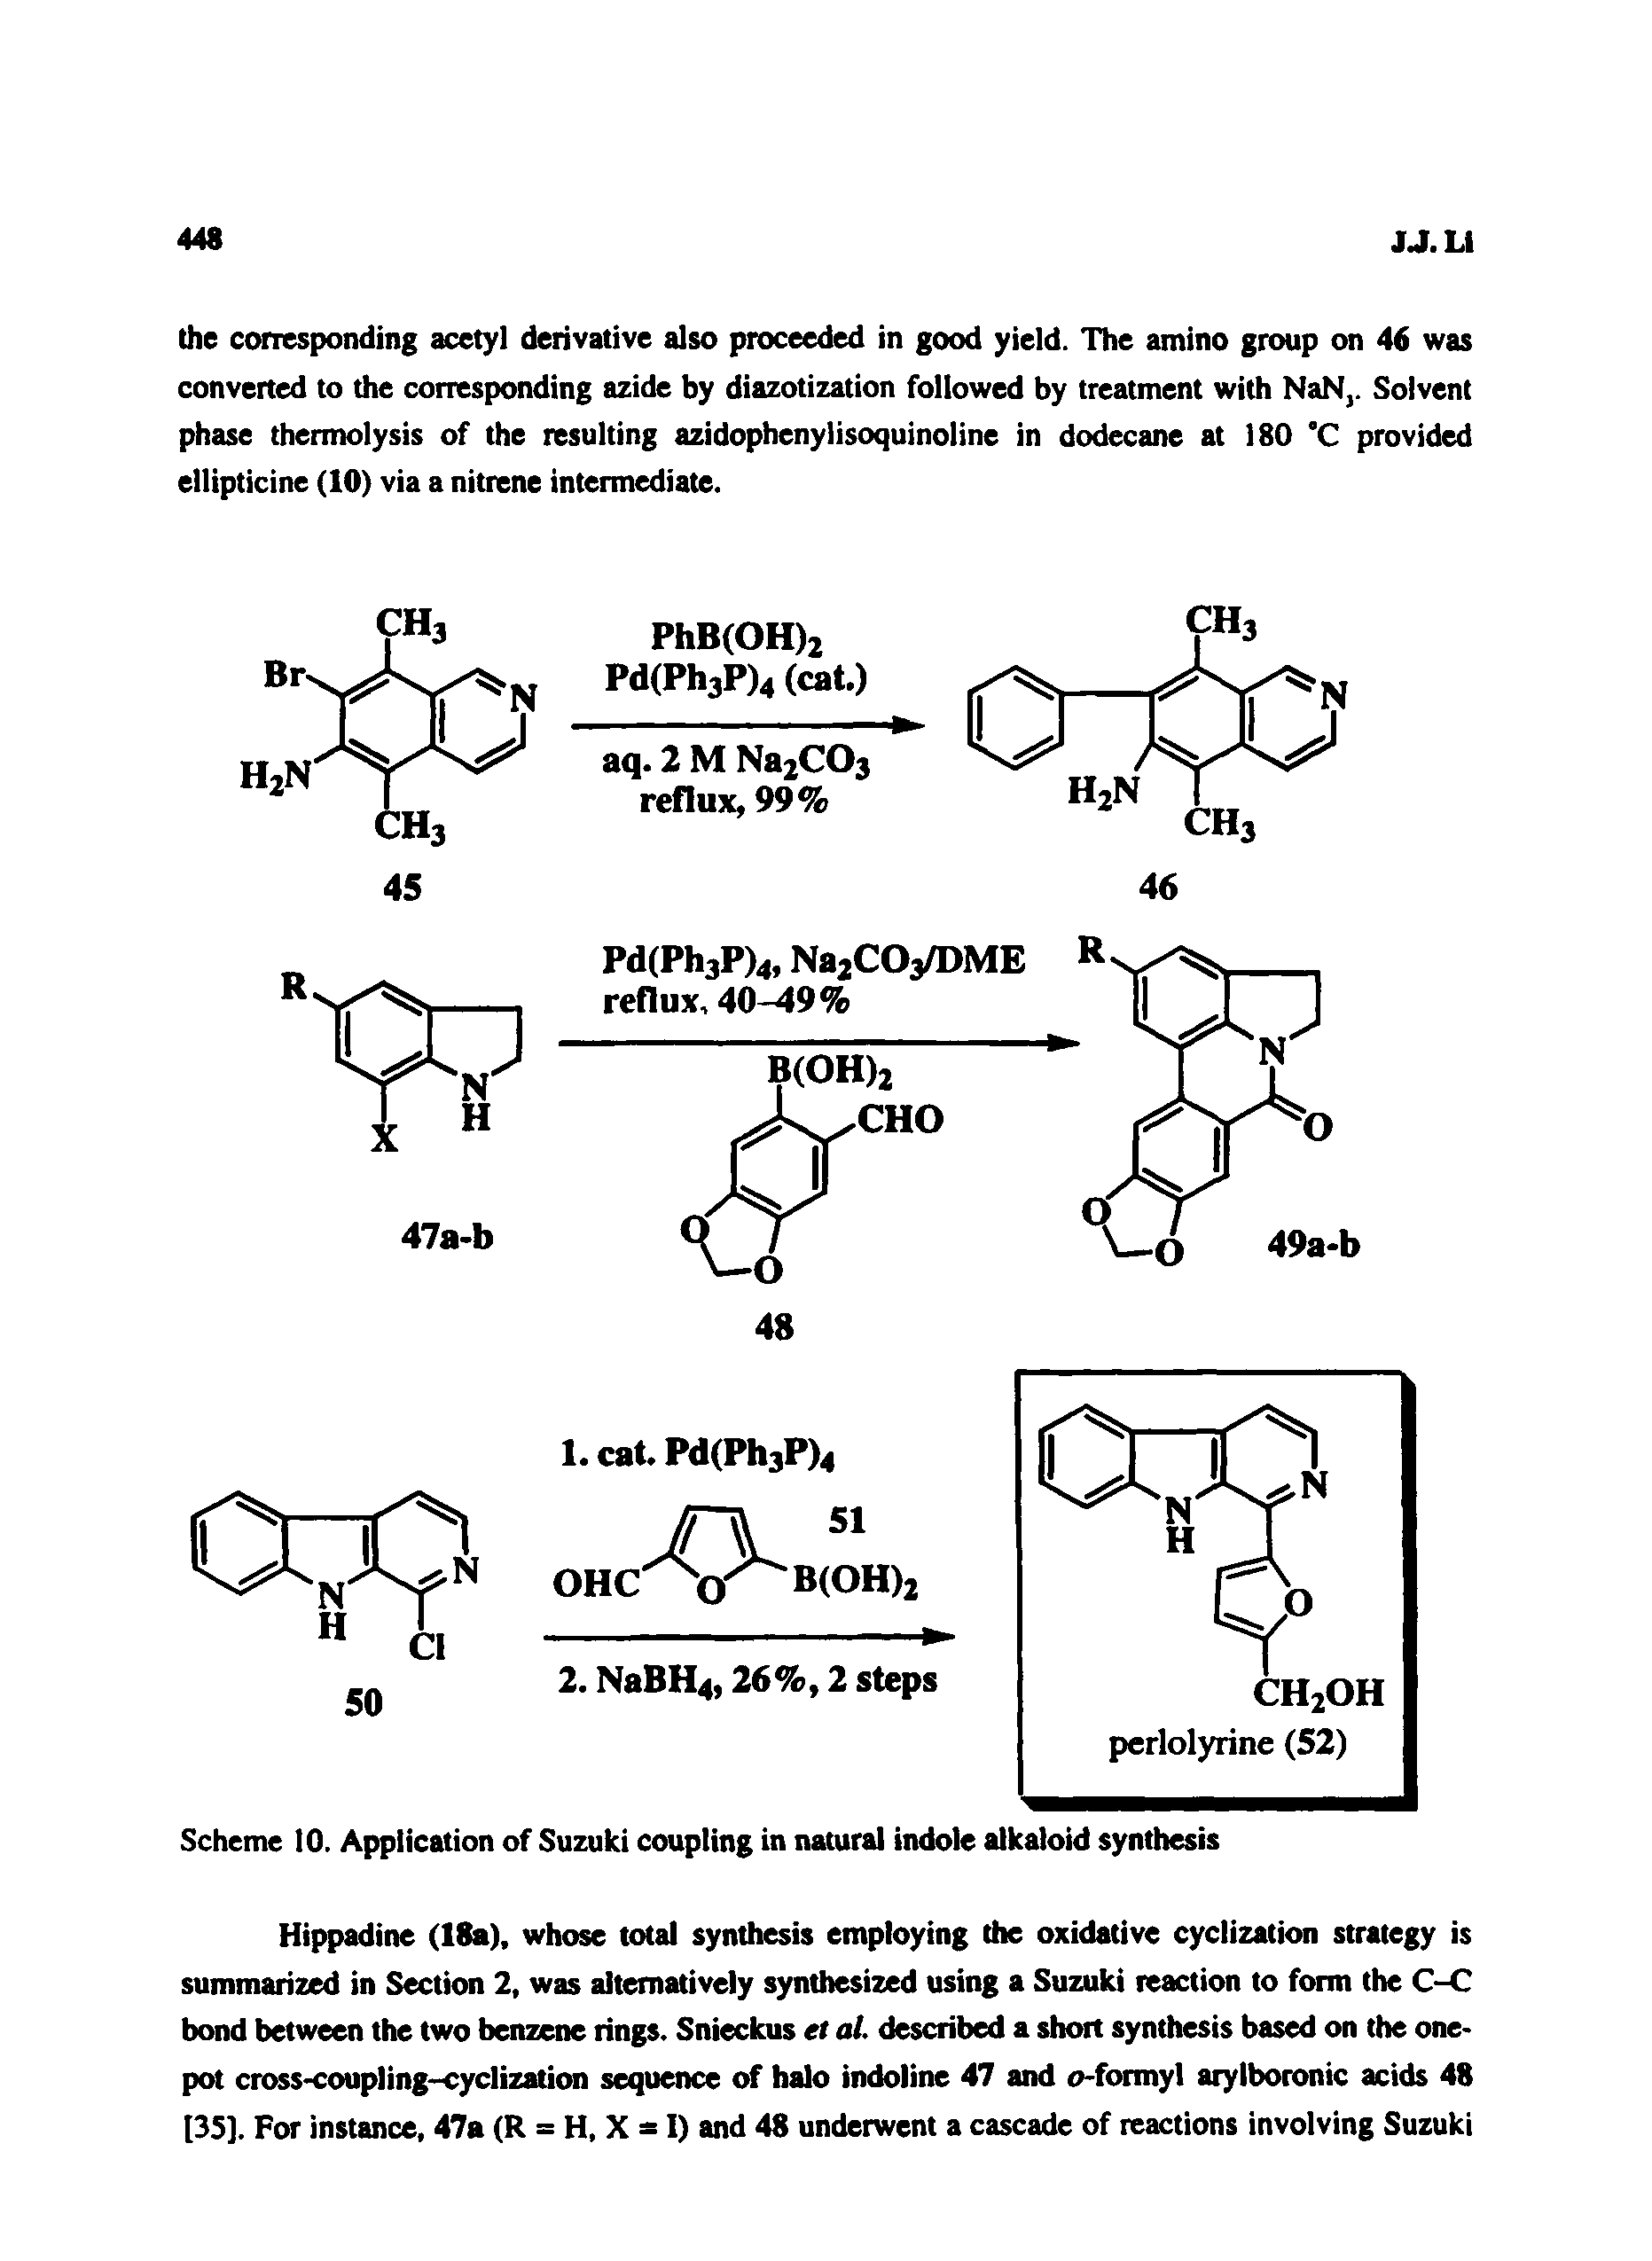 Scheme 10. Application of Suzuki coupling in natural indole alkaloid synthesis...